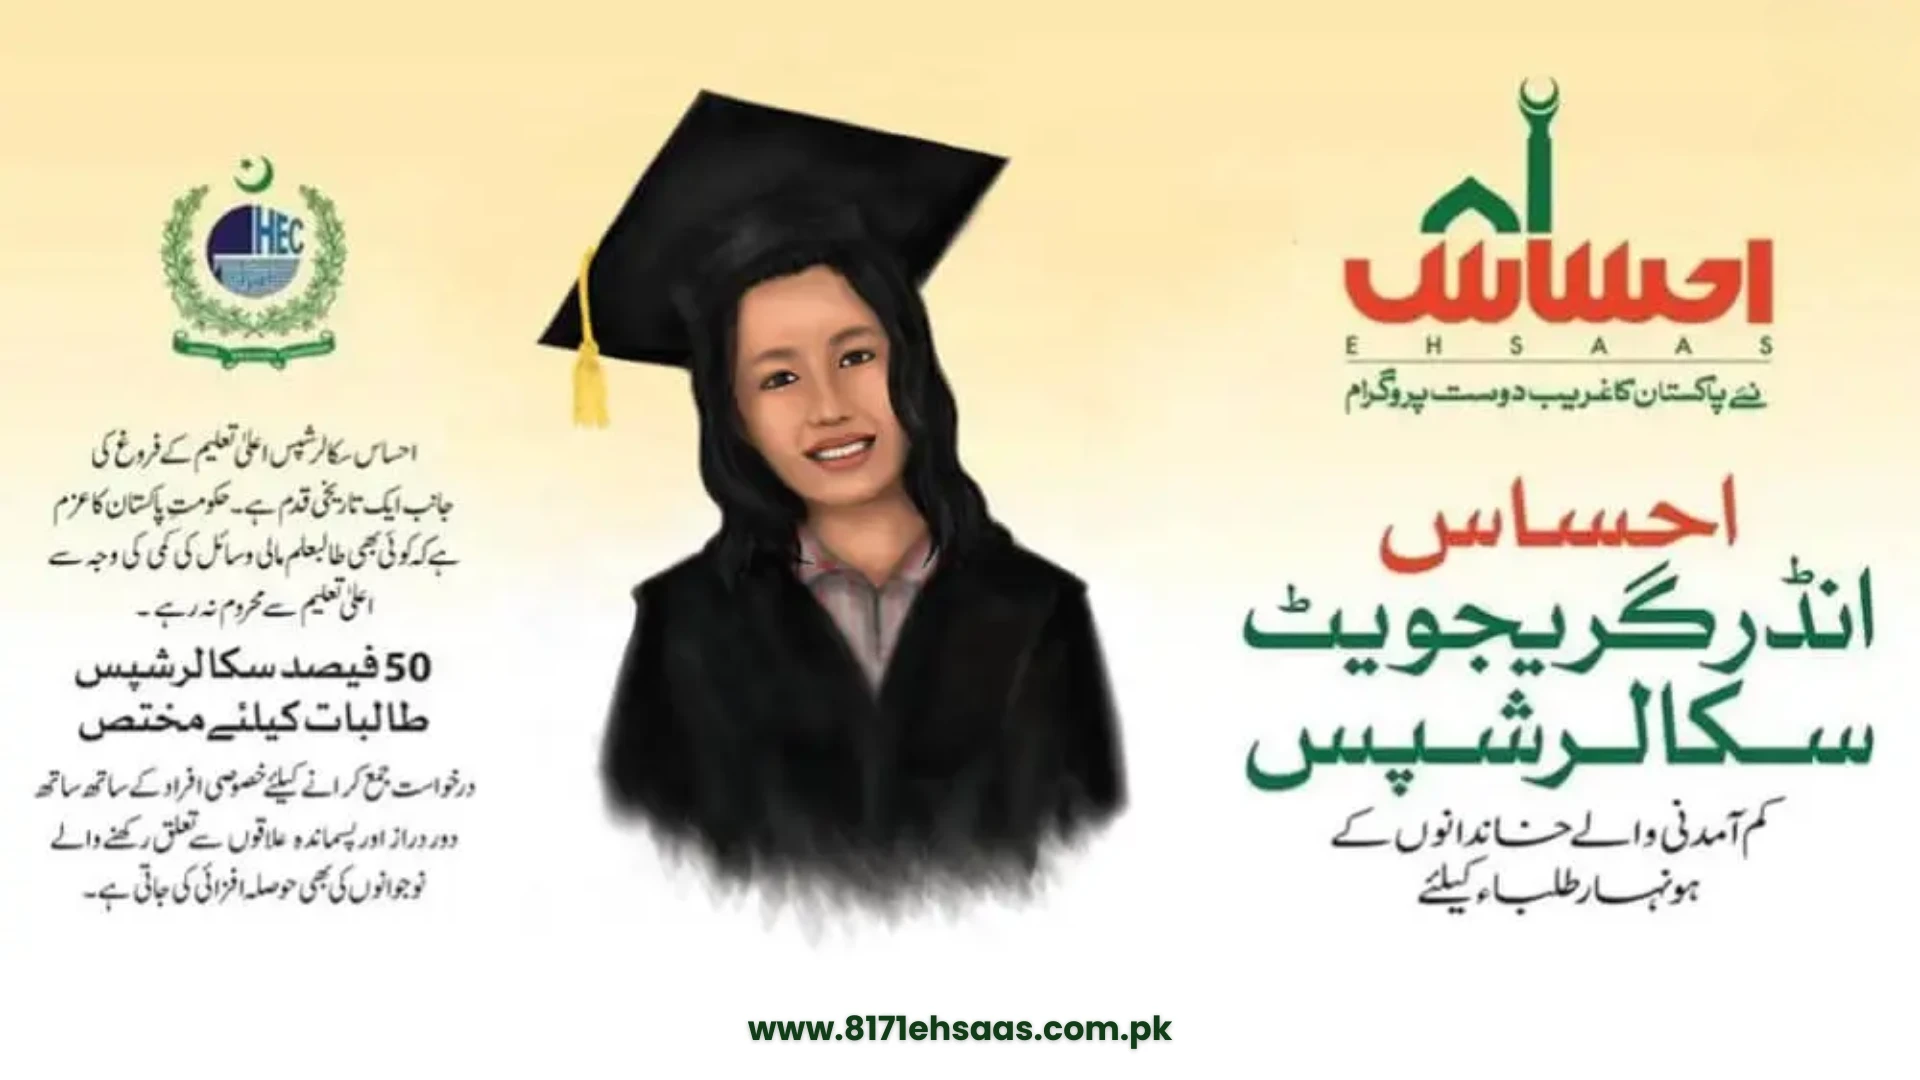 Ehsaas Scholarship University List, A Step Towards Revolution